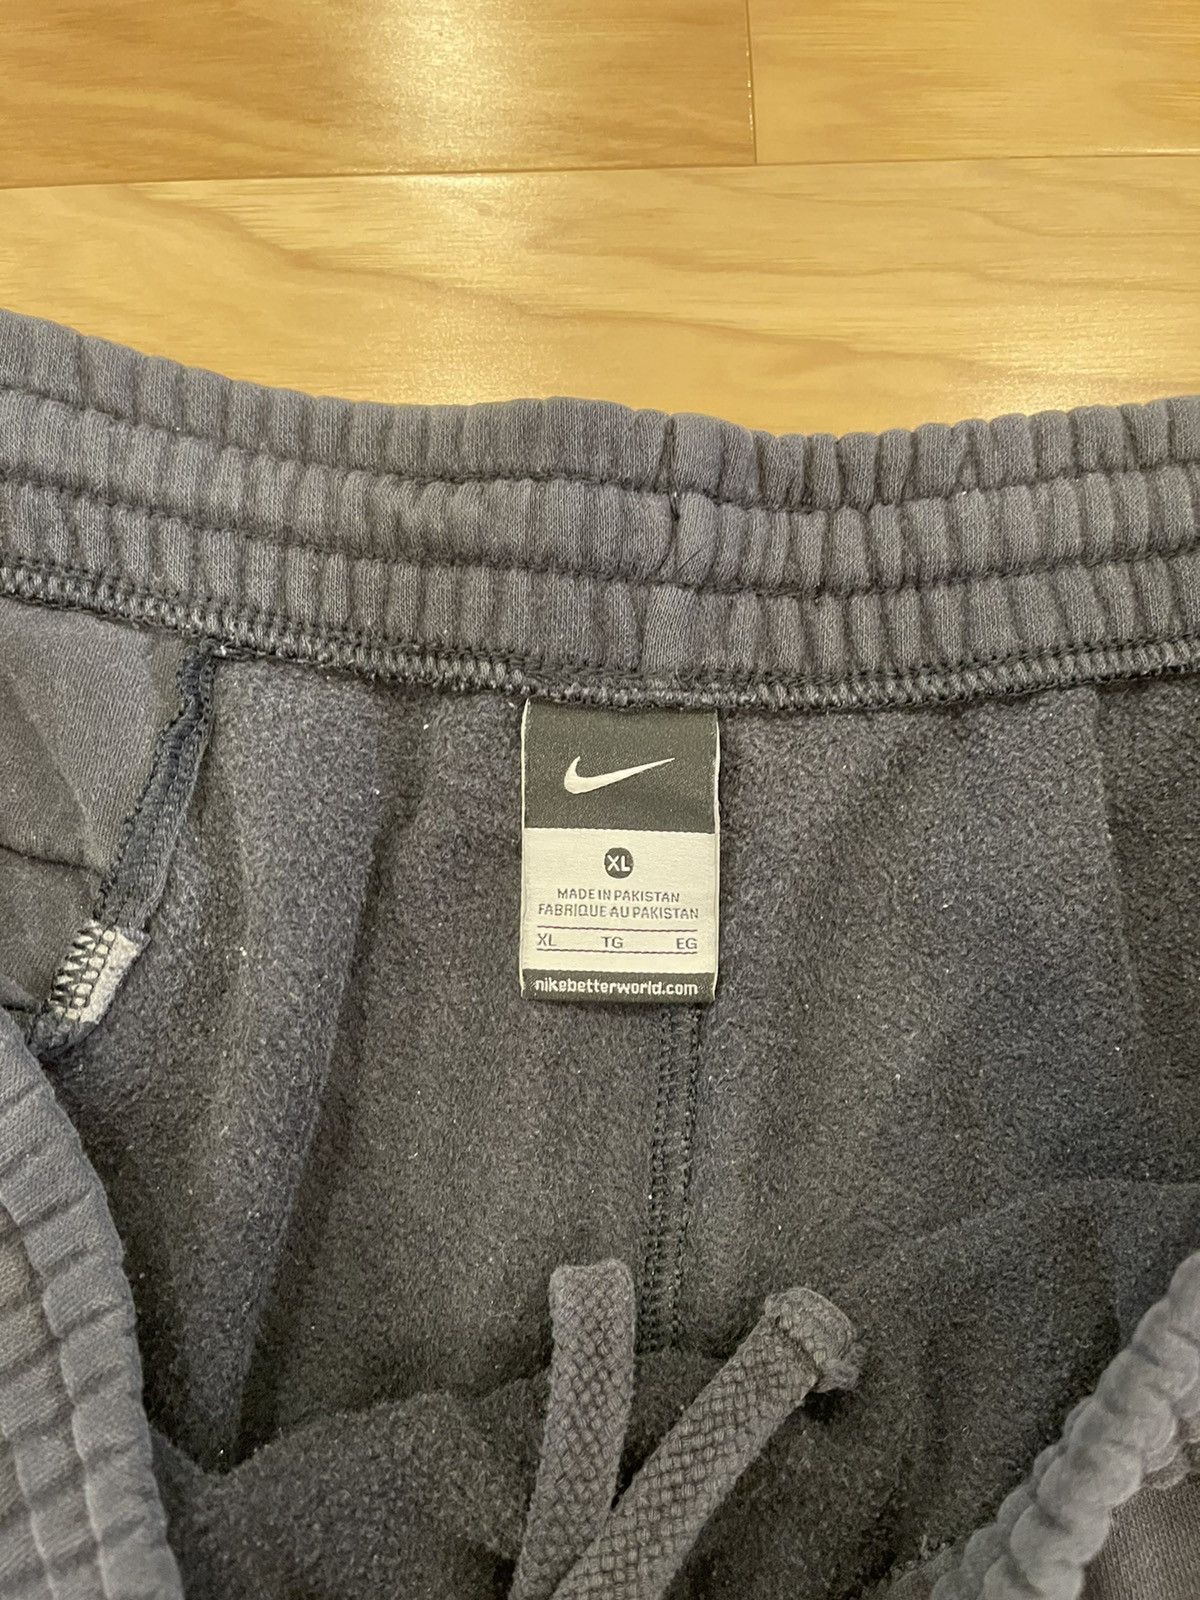 Nike Nike sweatpants Size US 37 - 2 Preview